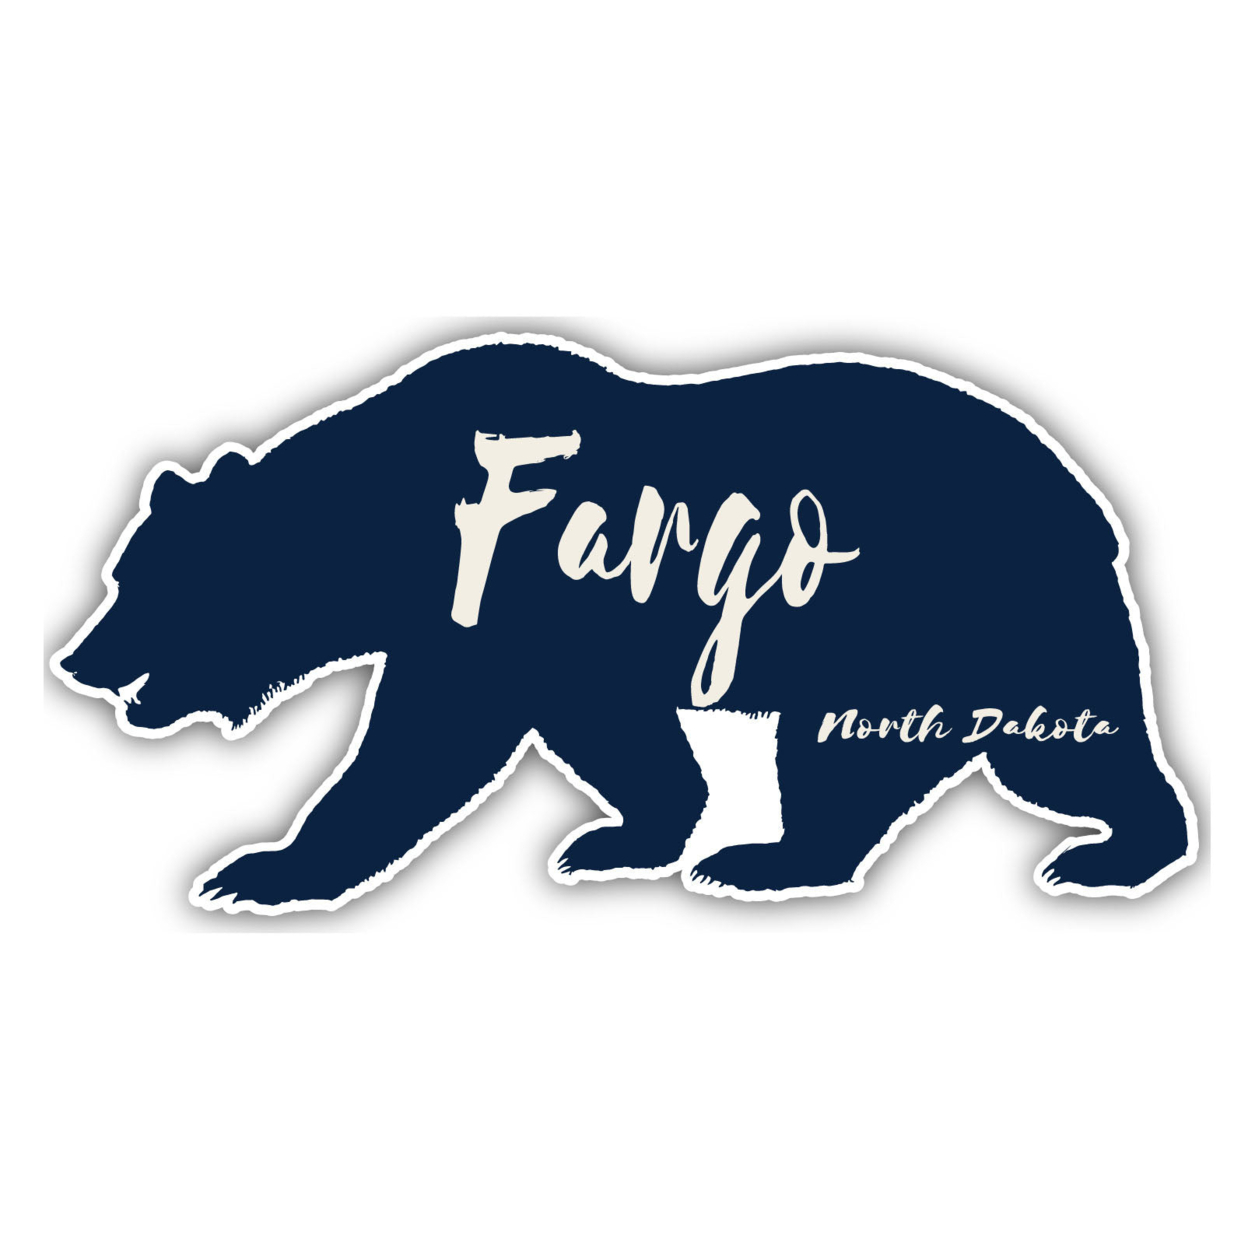 Fargo North Dakota Souvenir Decorative Stickers (Choose Theme And Size) - 4-Pack, 8-Inch, Tent